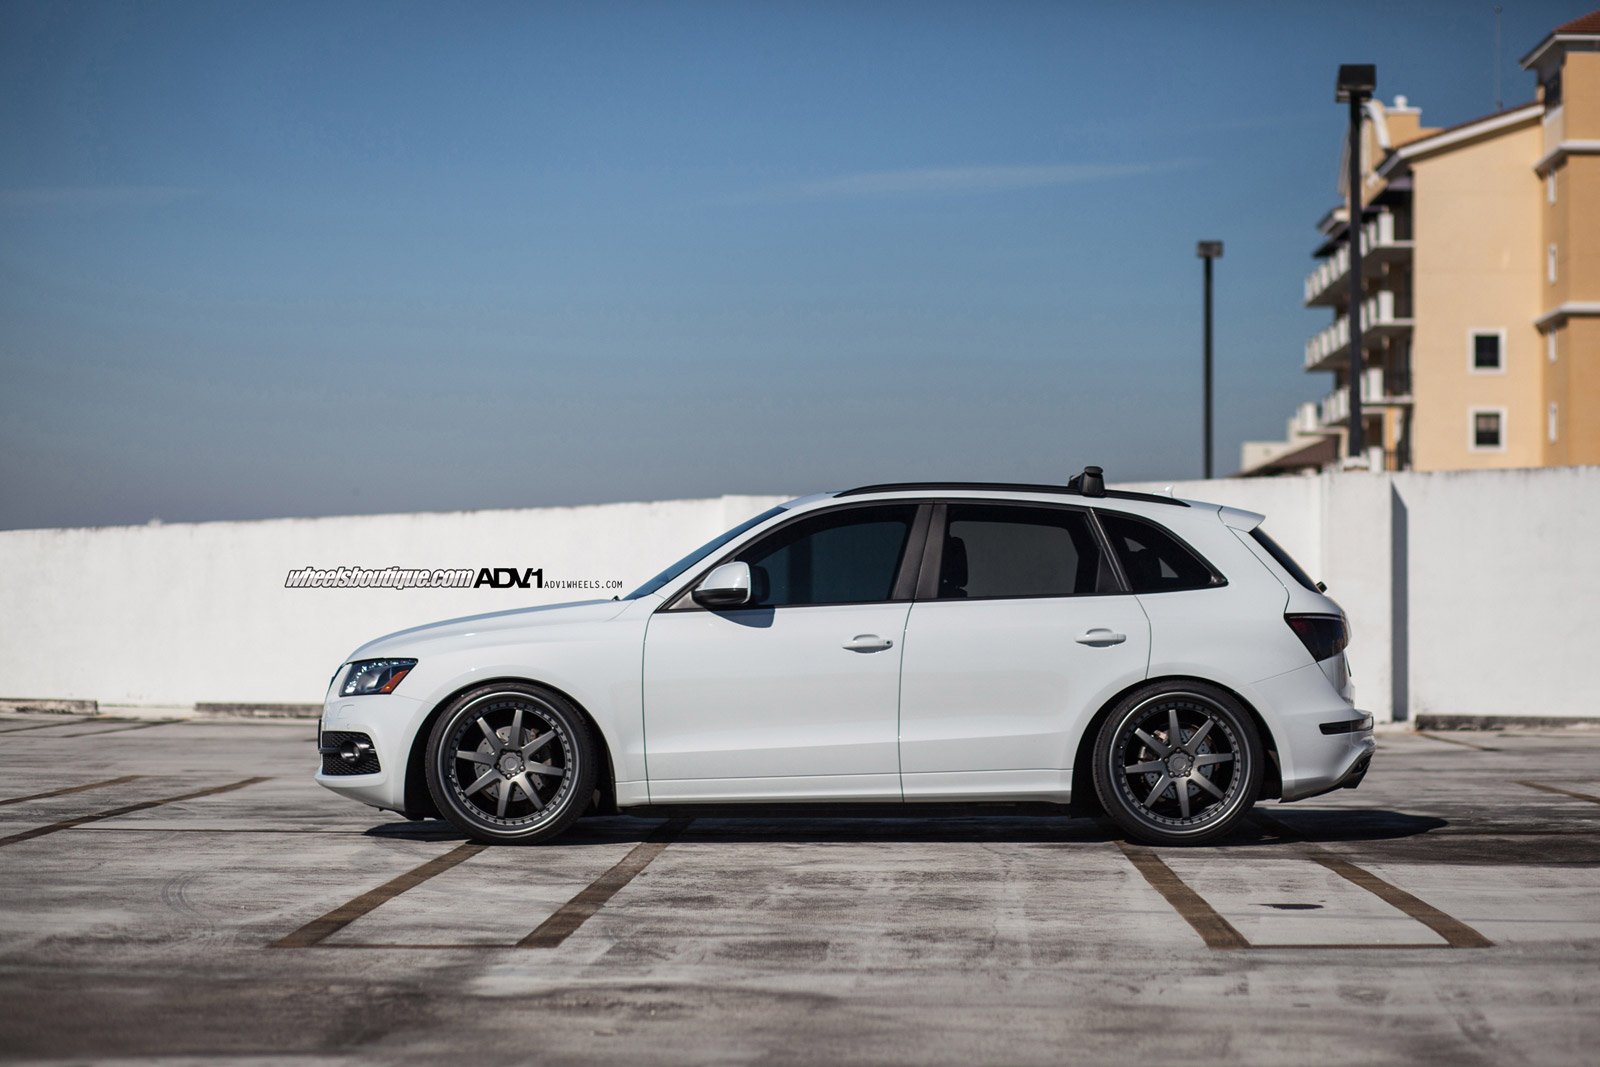 2014, Adv1, Audi, Q5, Suv, Wheels Wallpaper